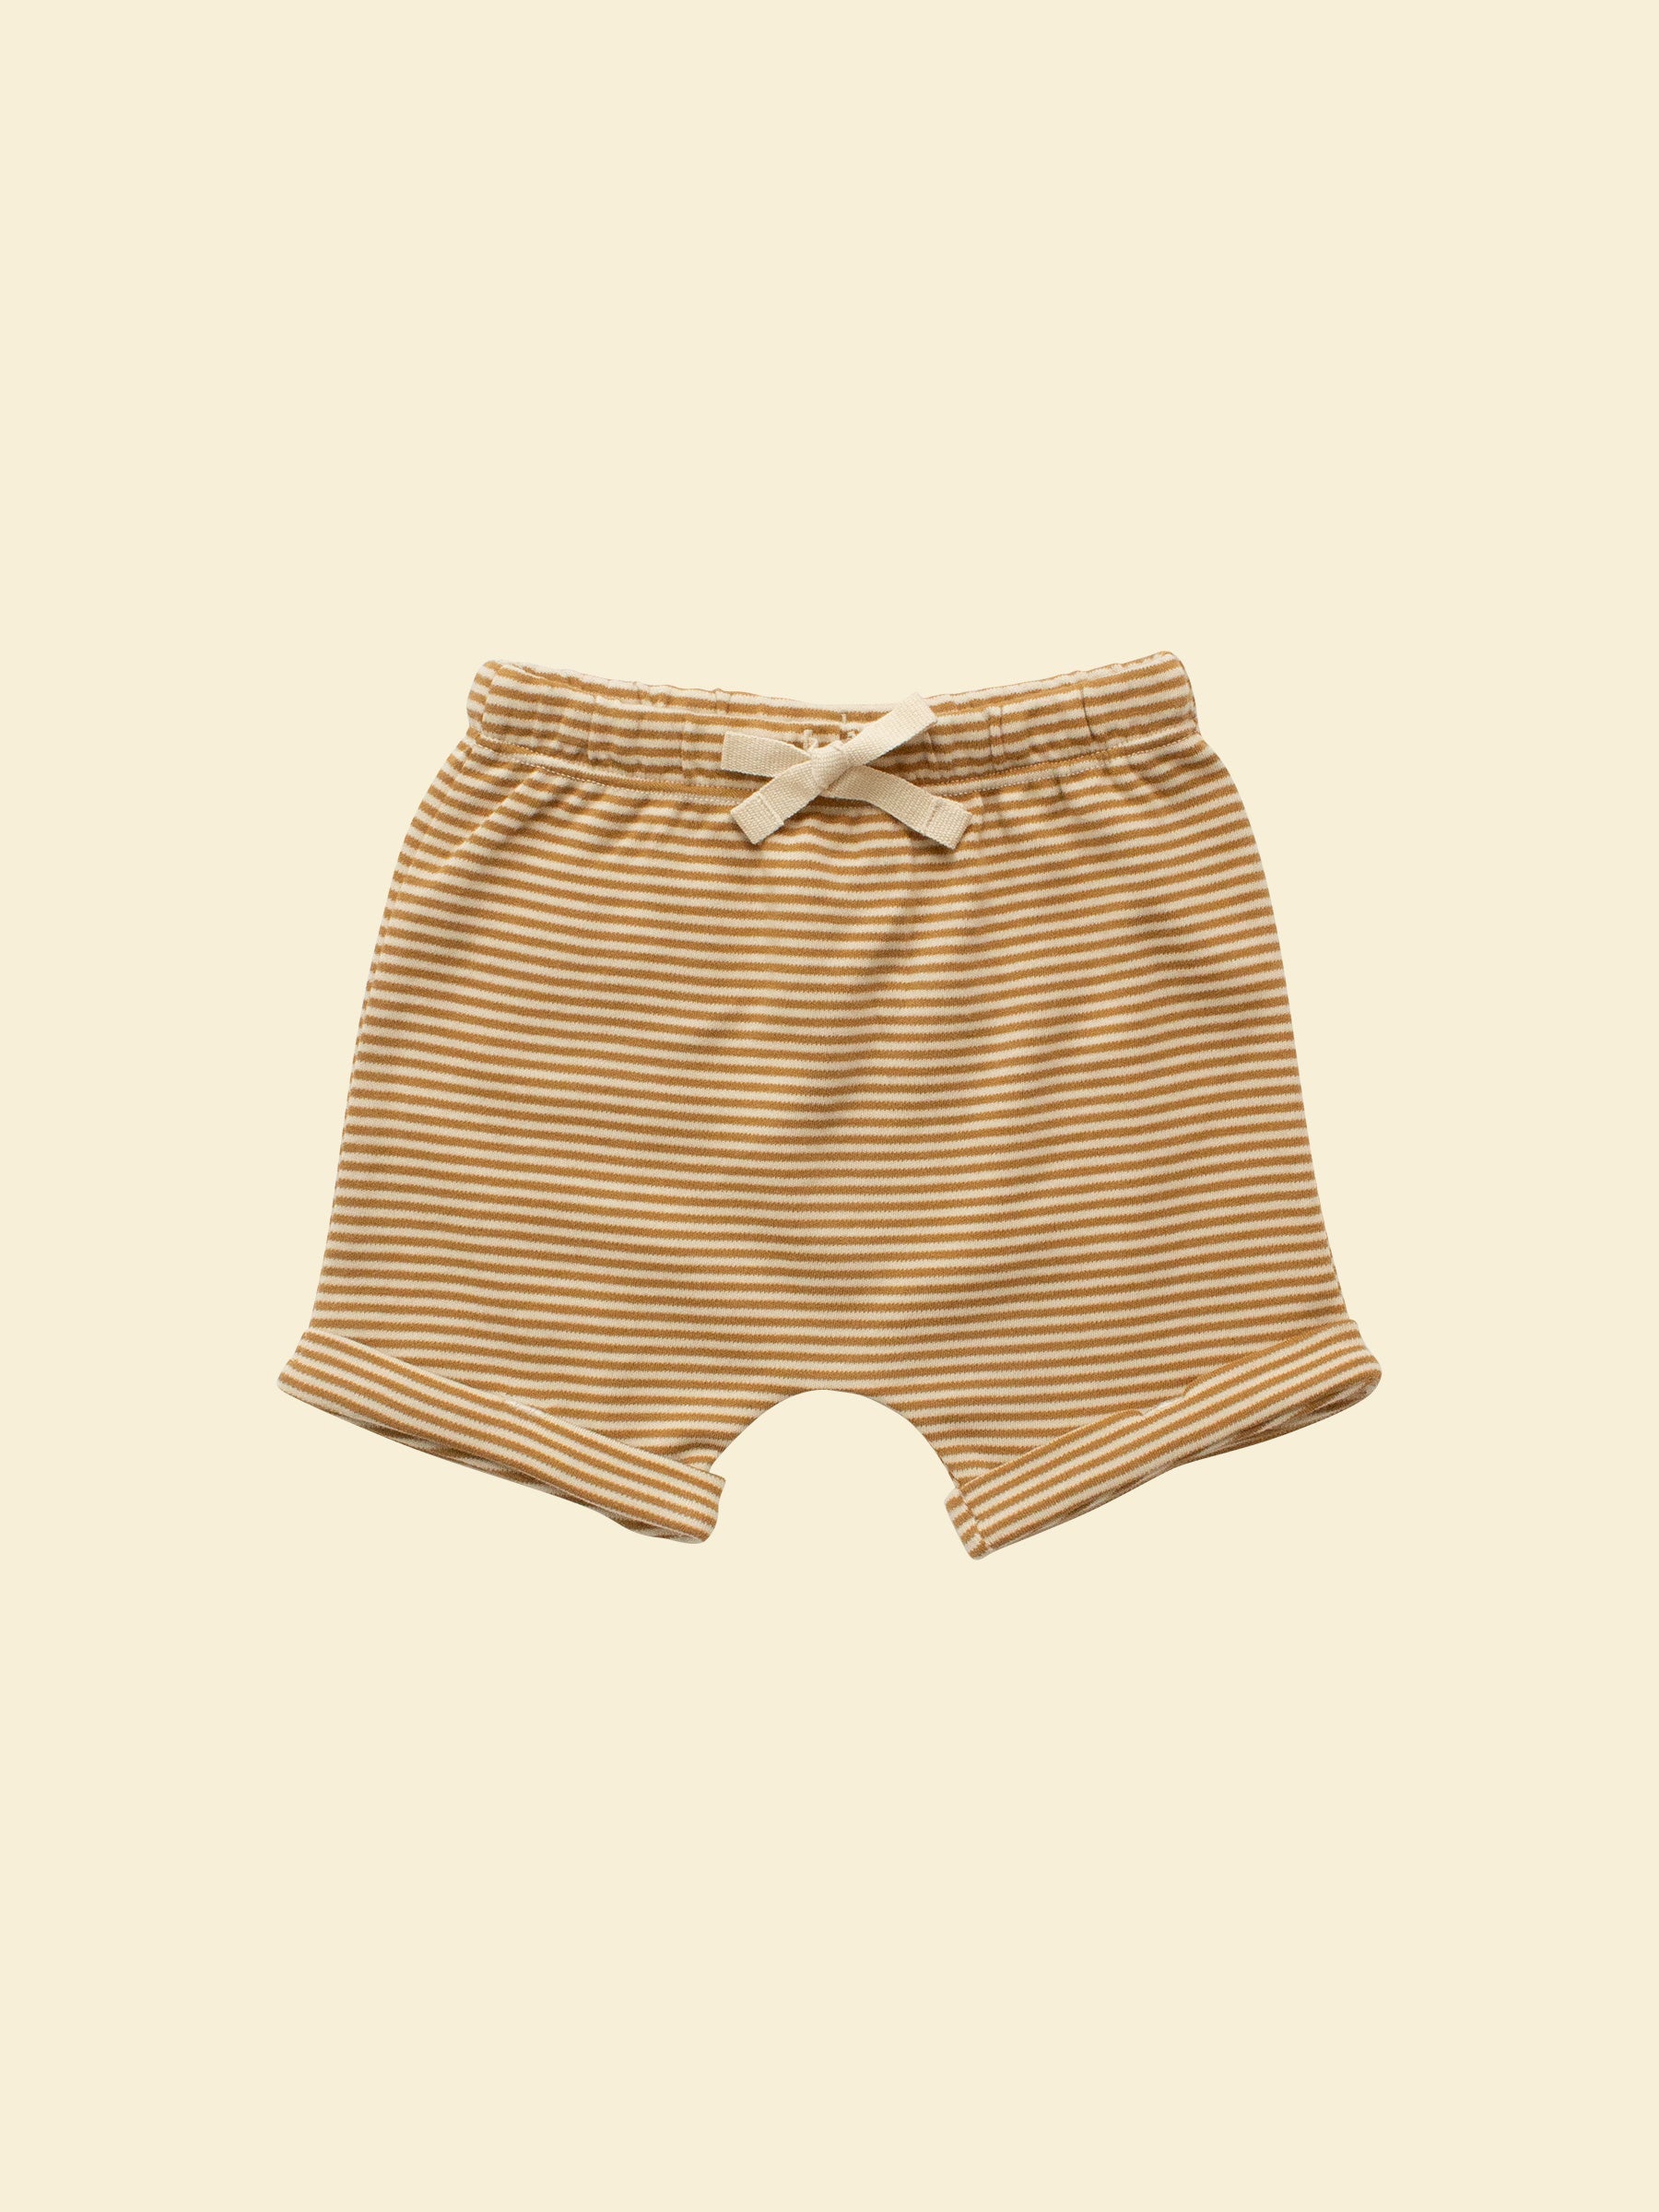 Unisex Shorts - Ochre Stripe (front)